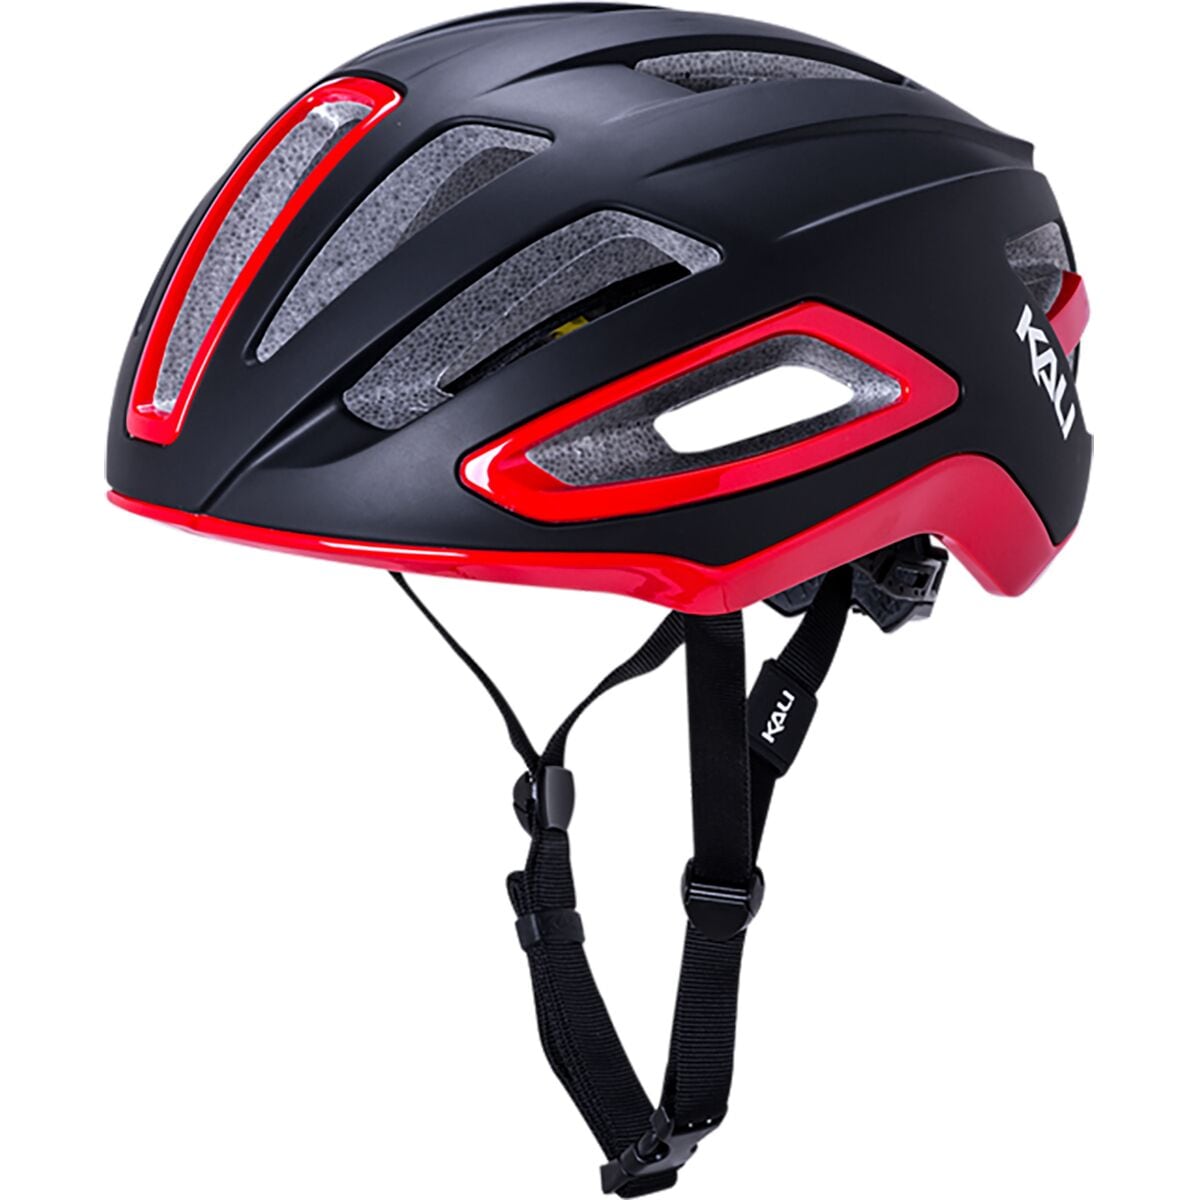 Kali Protectives Uno Bike Helmet